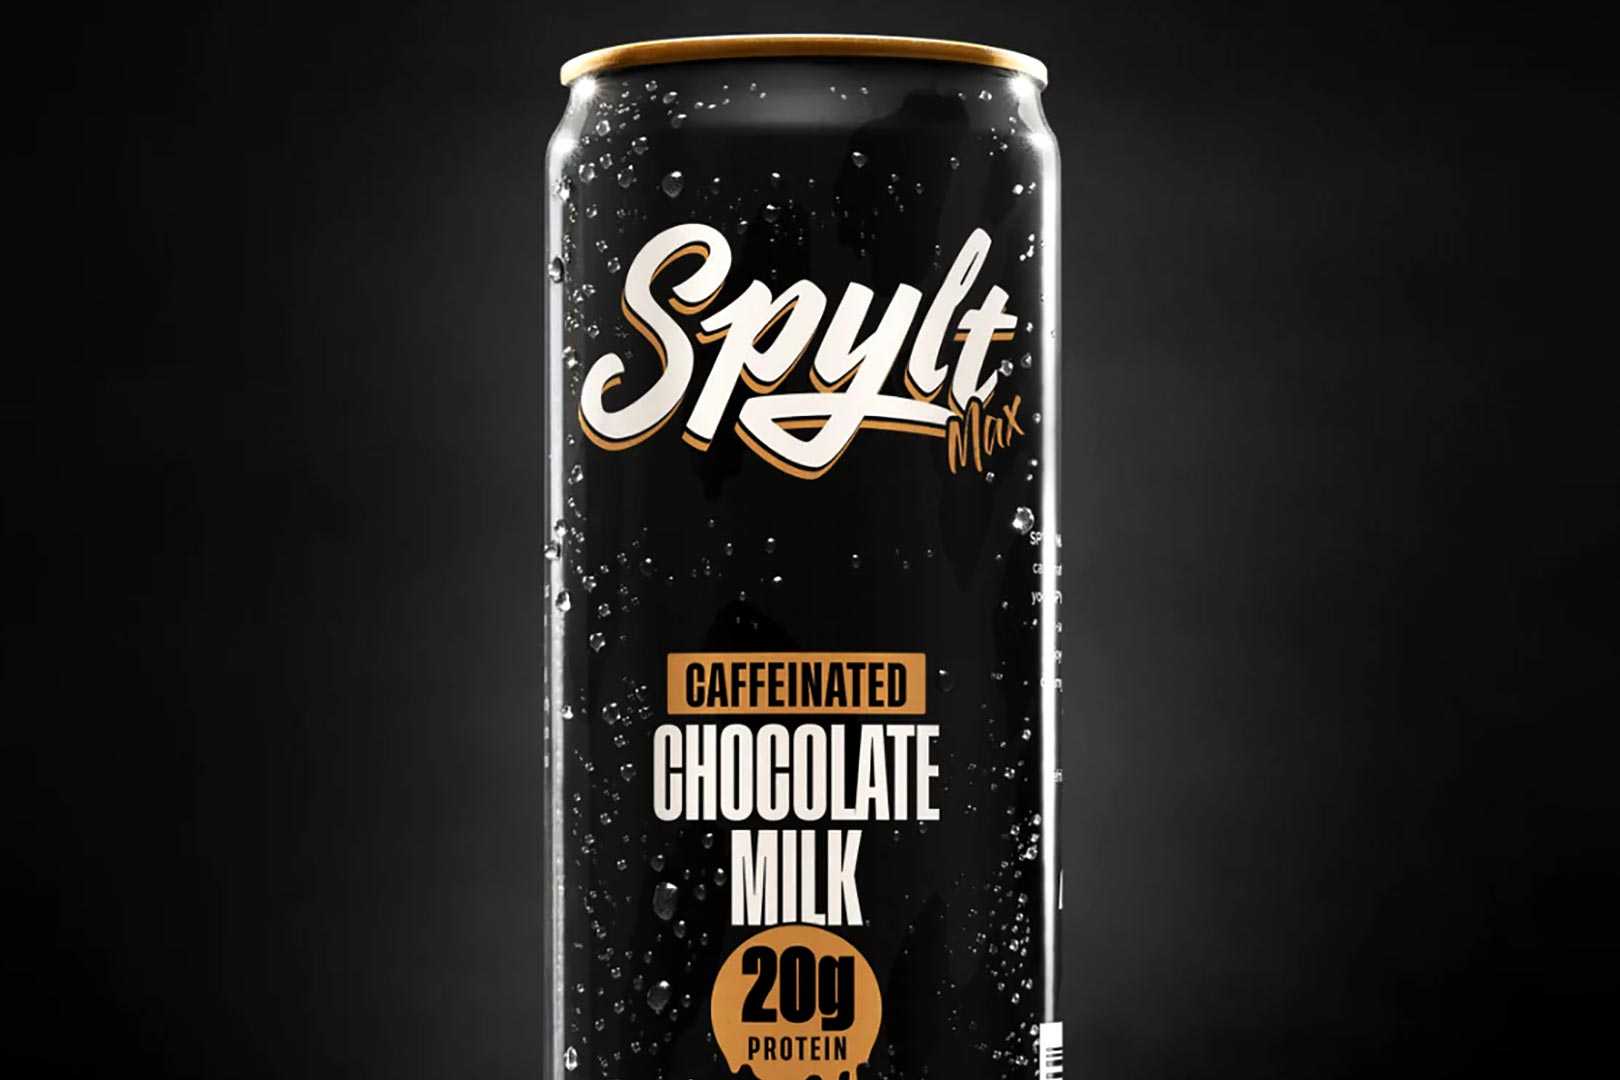 Spylt Max Chocolate Milk